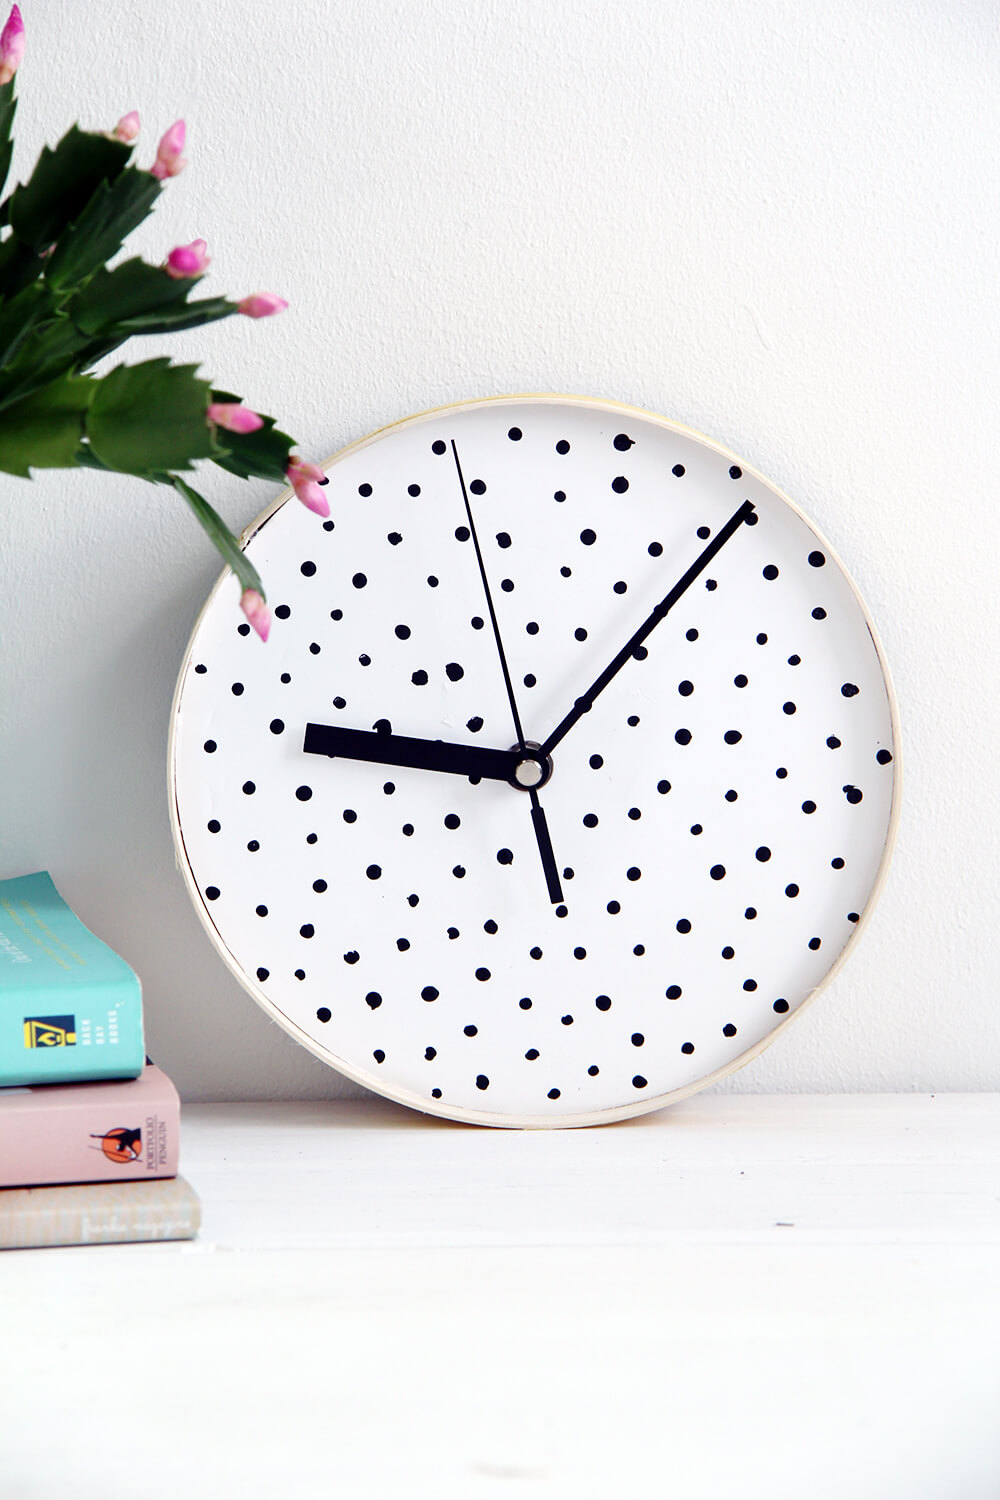 15 Wonderful DIY Wall Clock Projects You Will Enjoy Creating